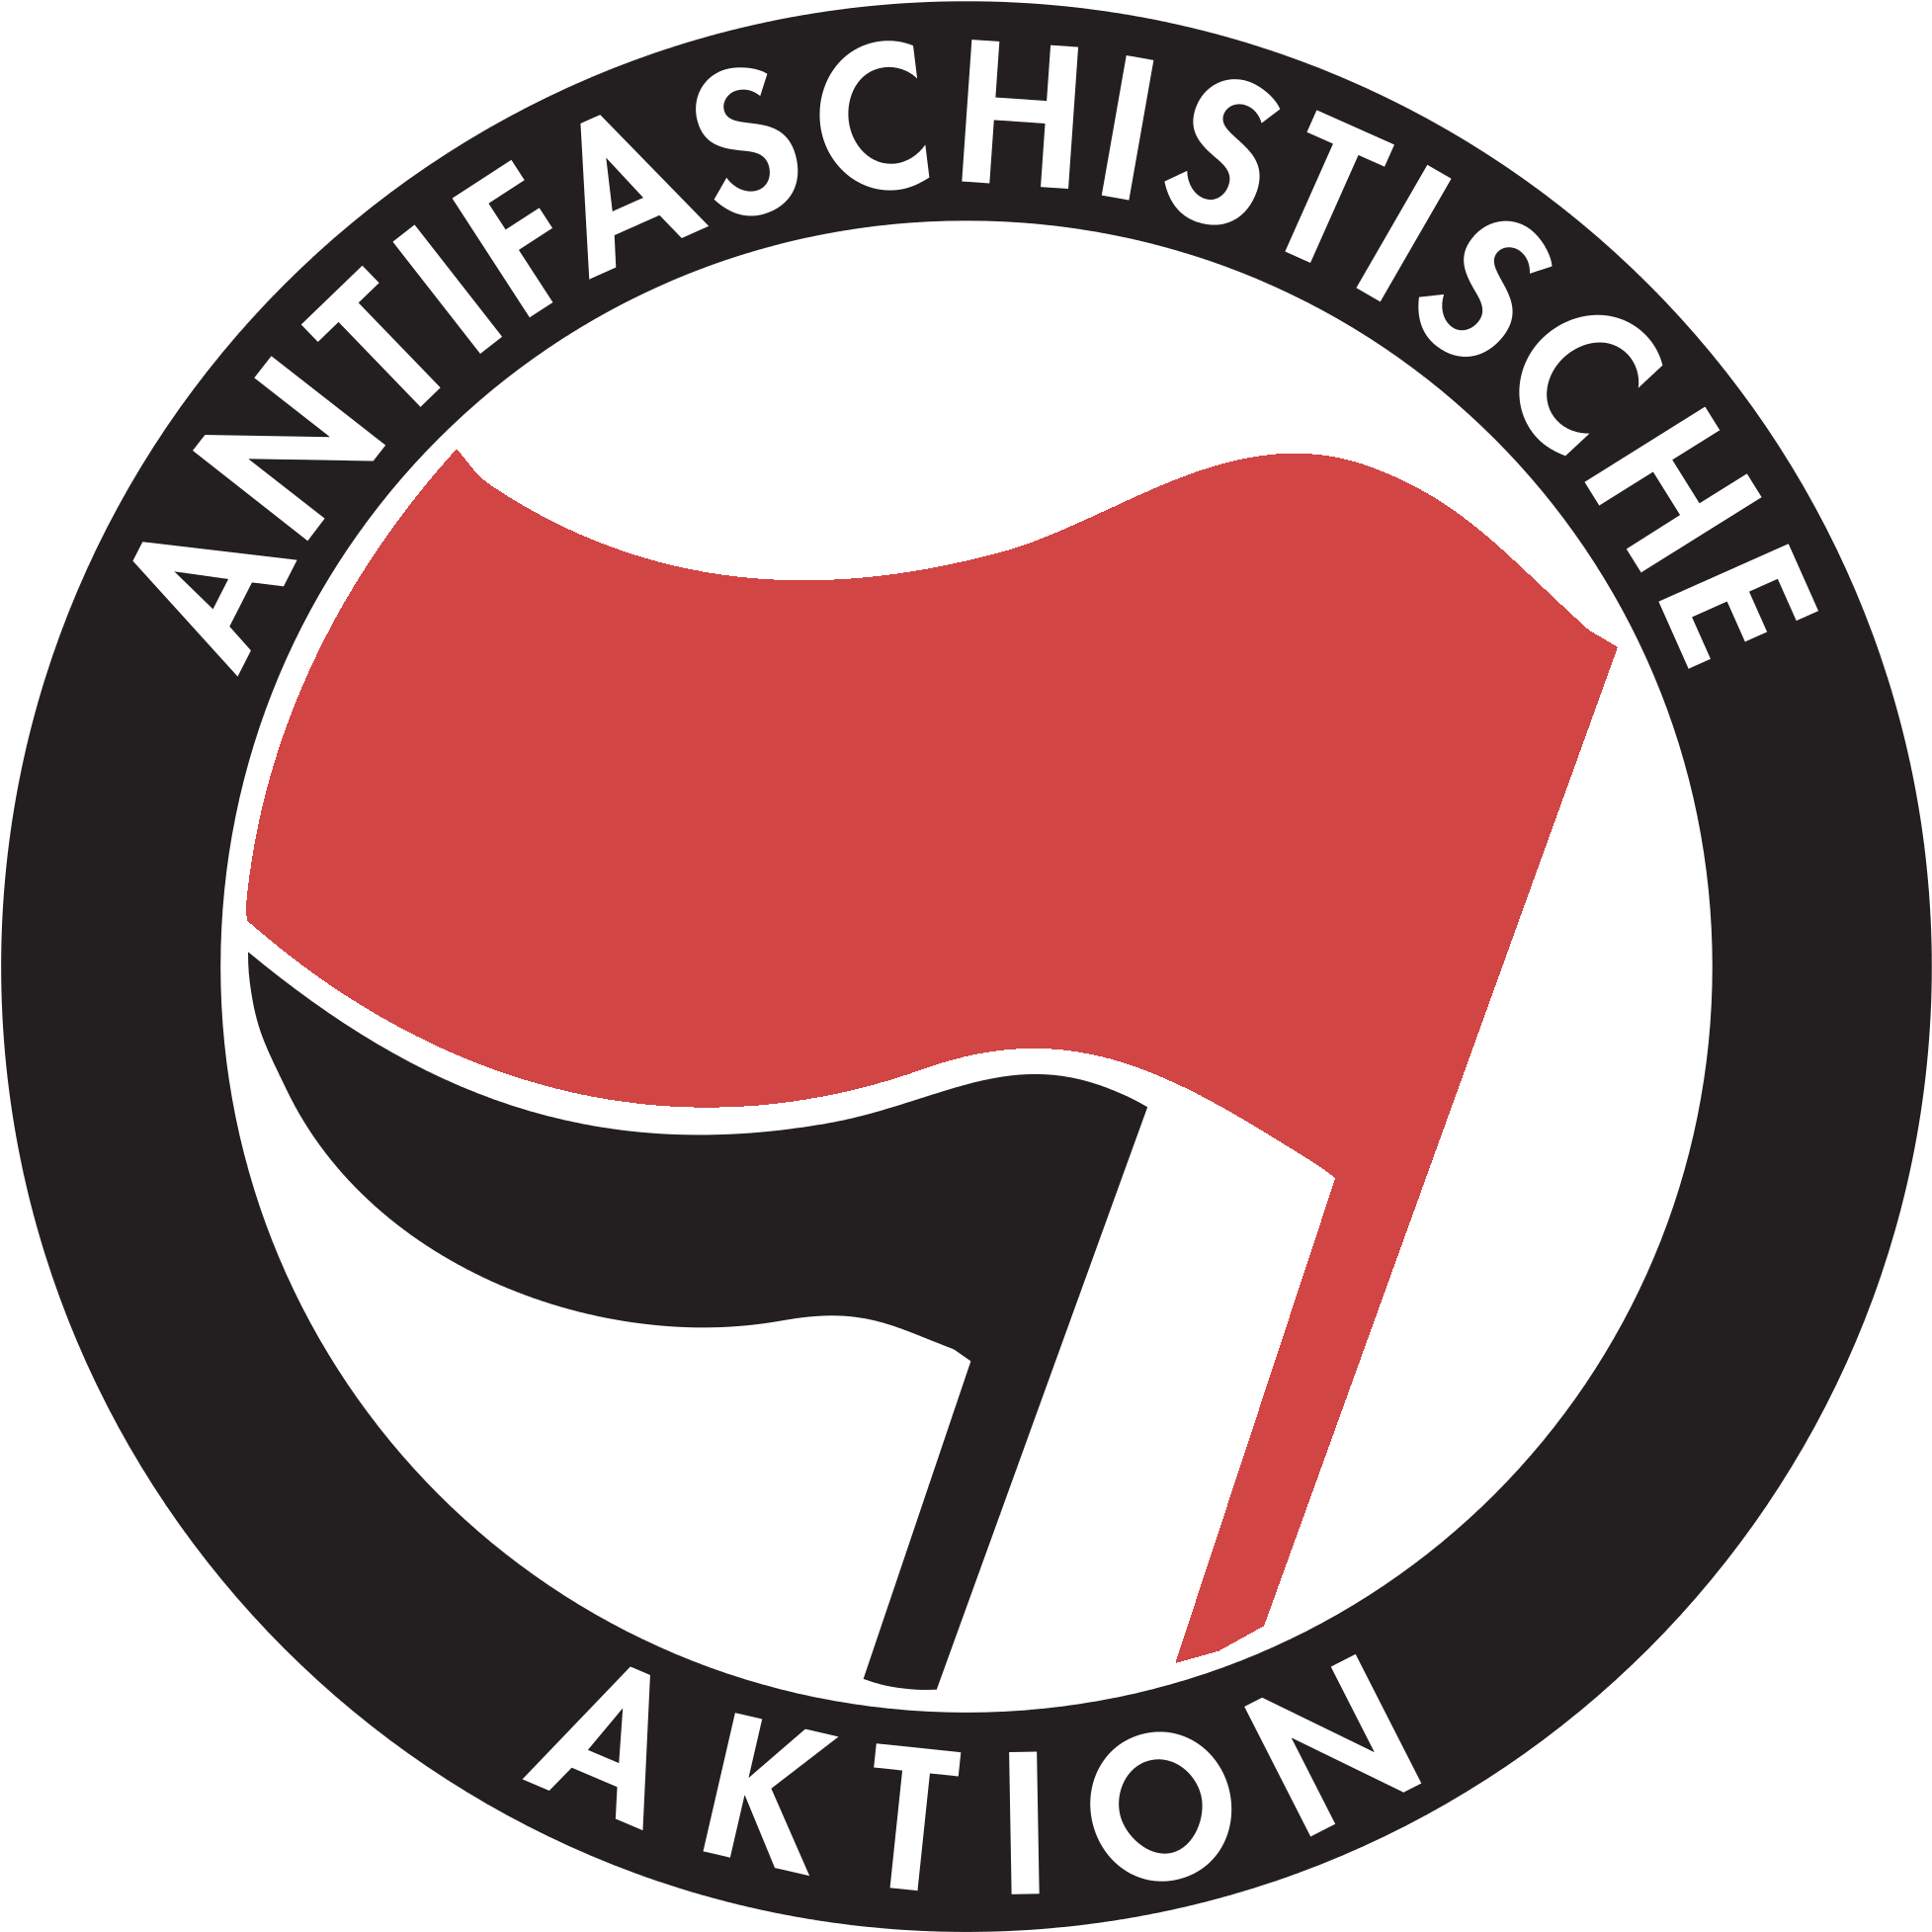 While - Anti Fascist (2000x2000)